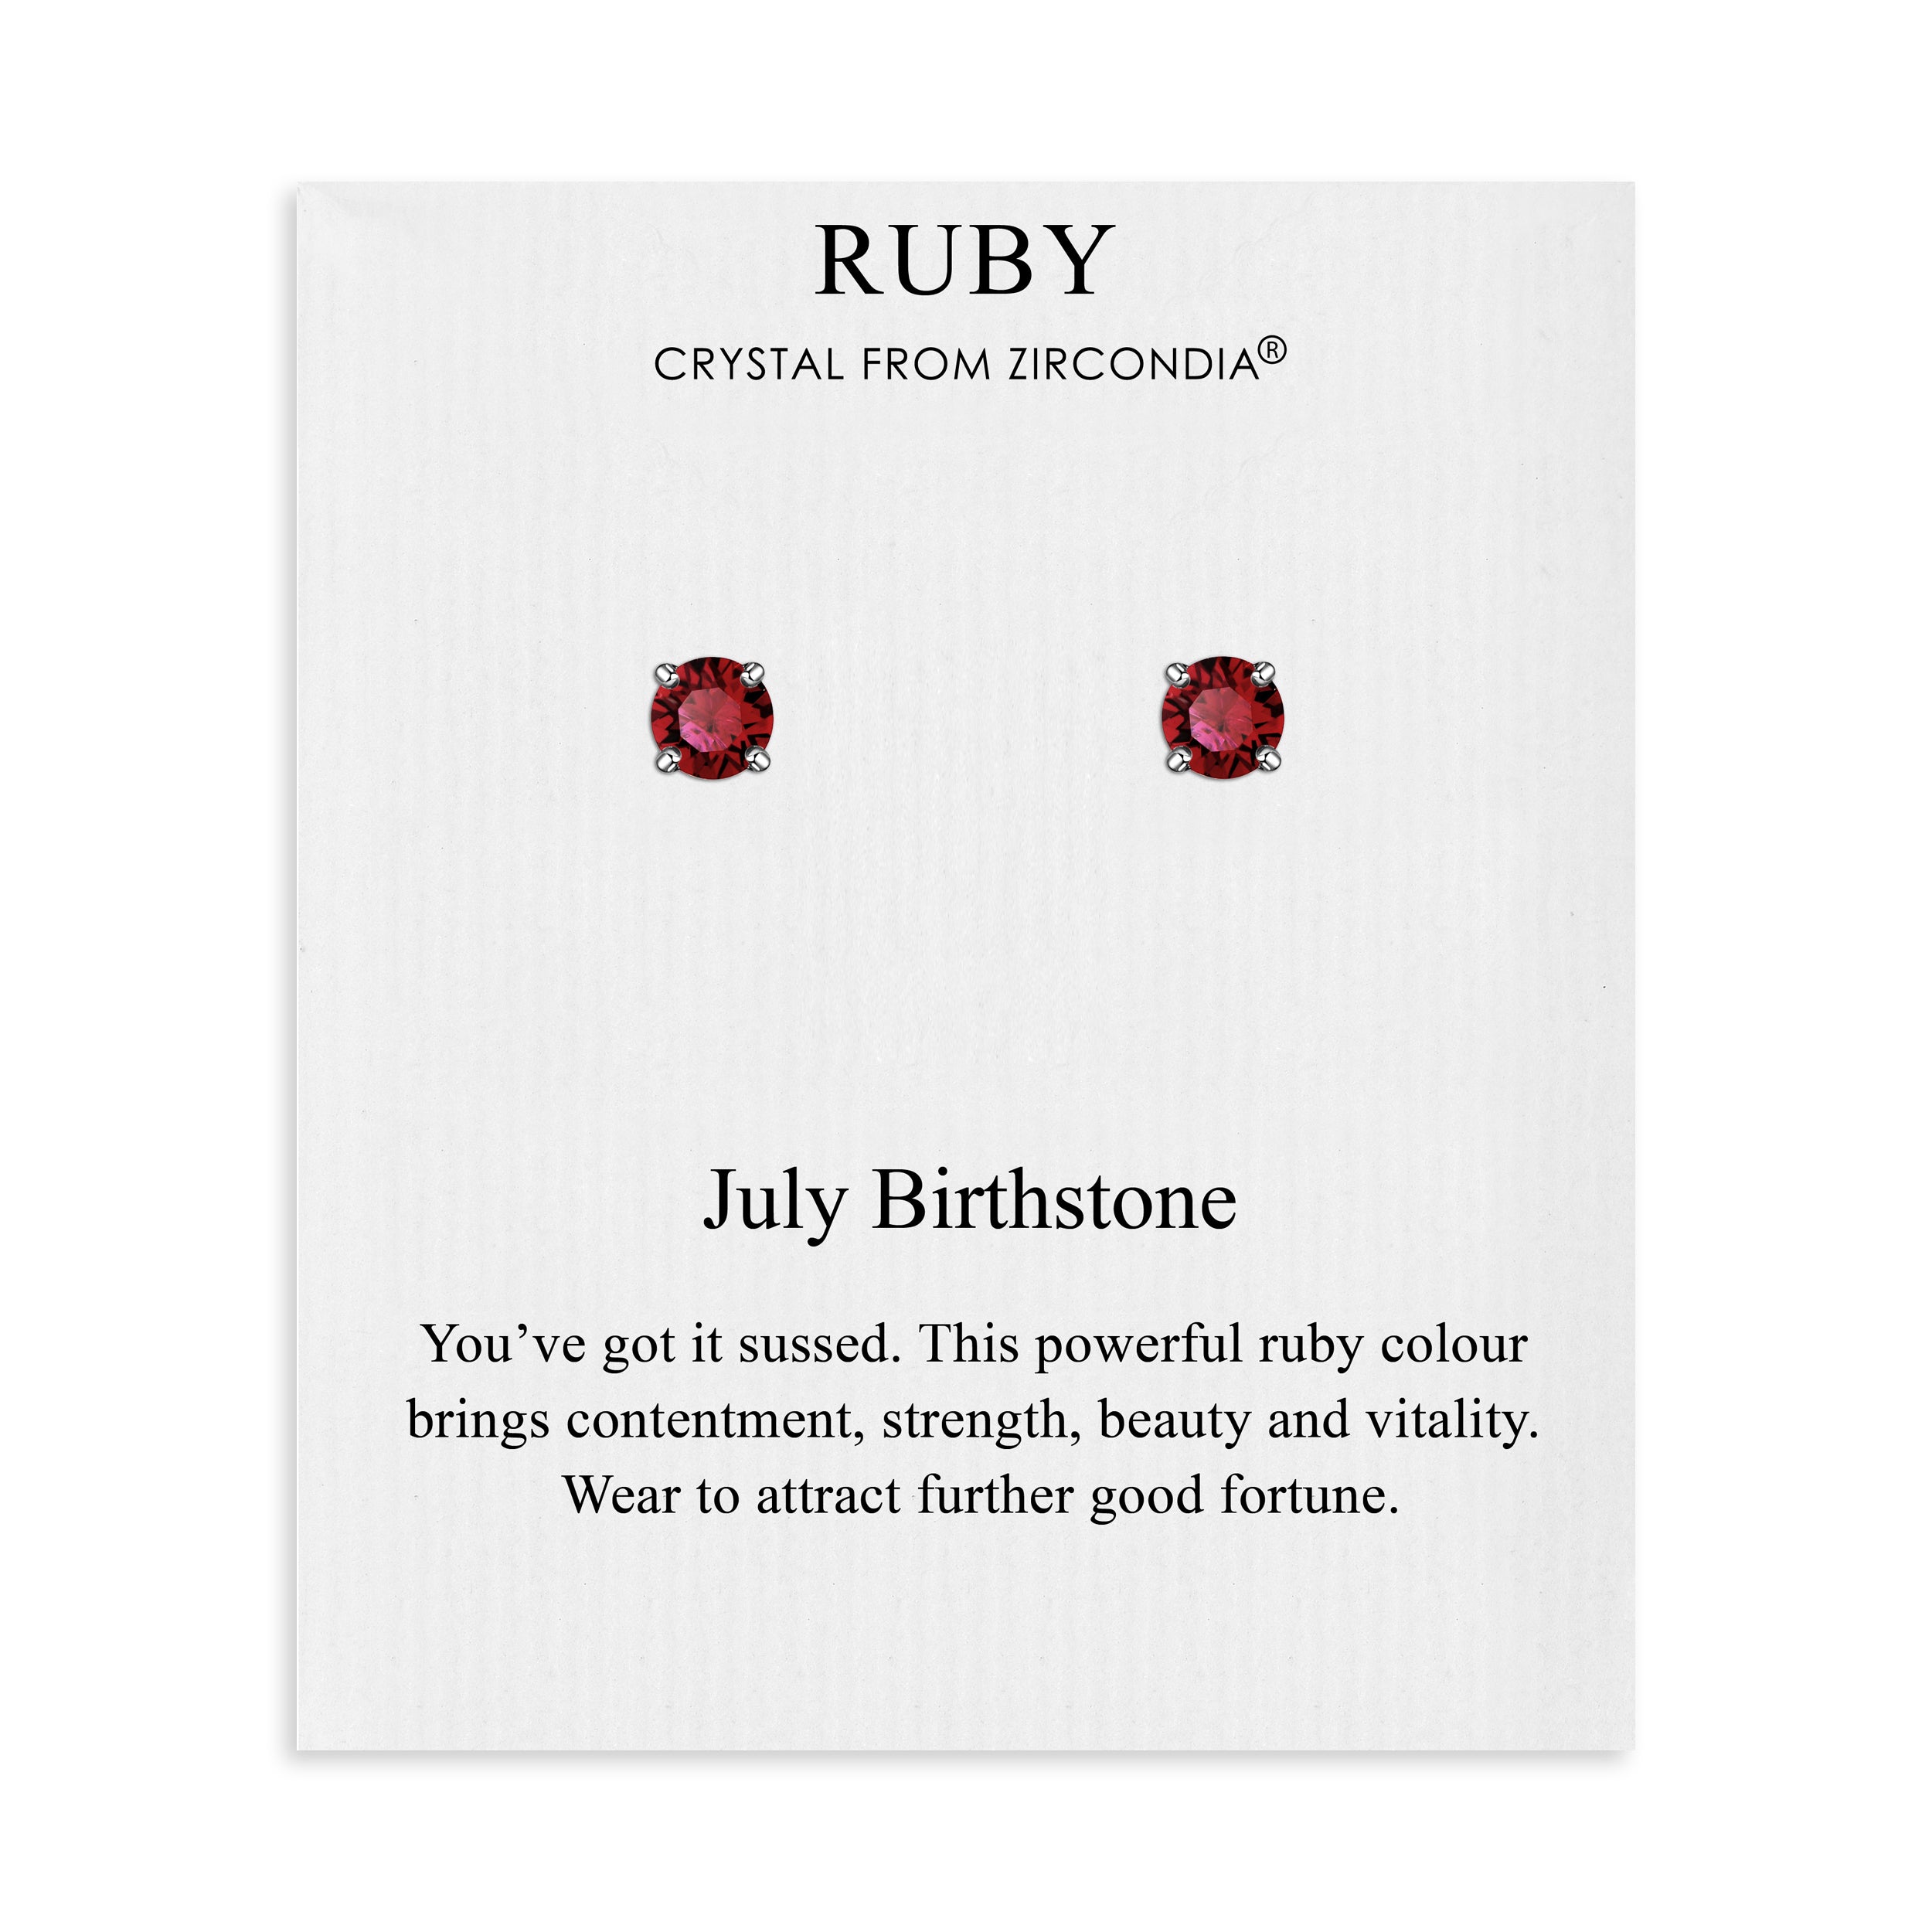 July (Ruby) Birthstone Earrings Created with Zircondia® Crystals by Philip Jones Jewellery